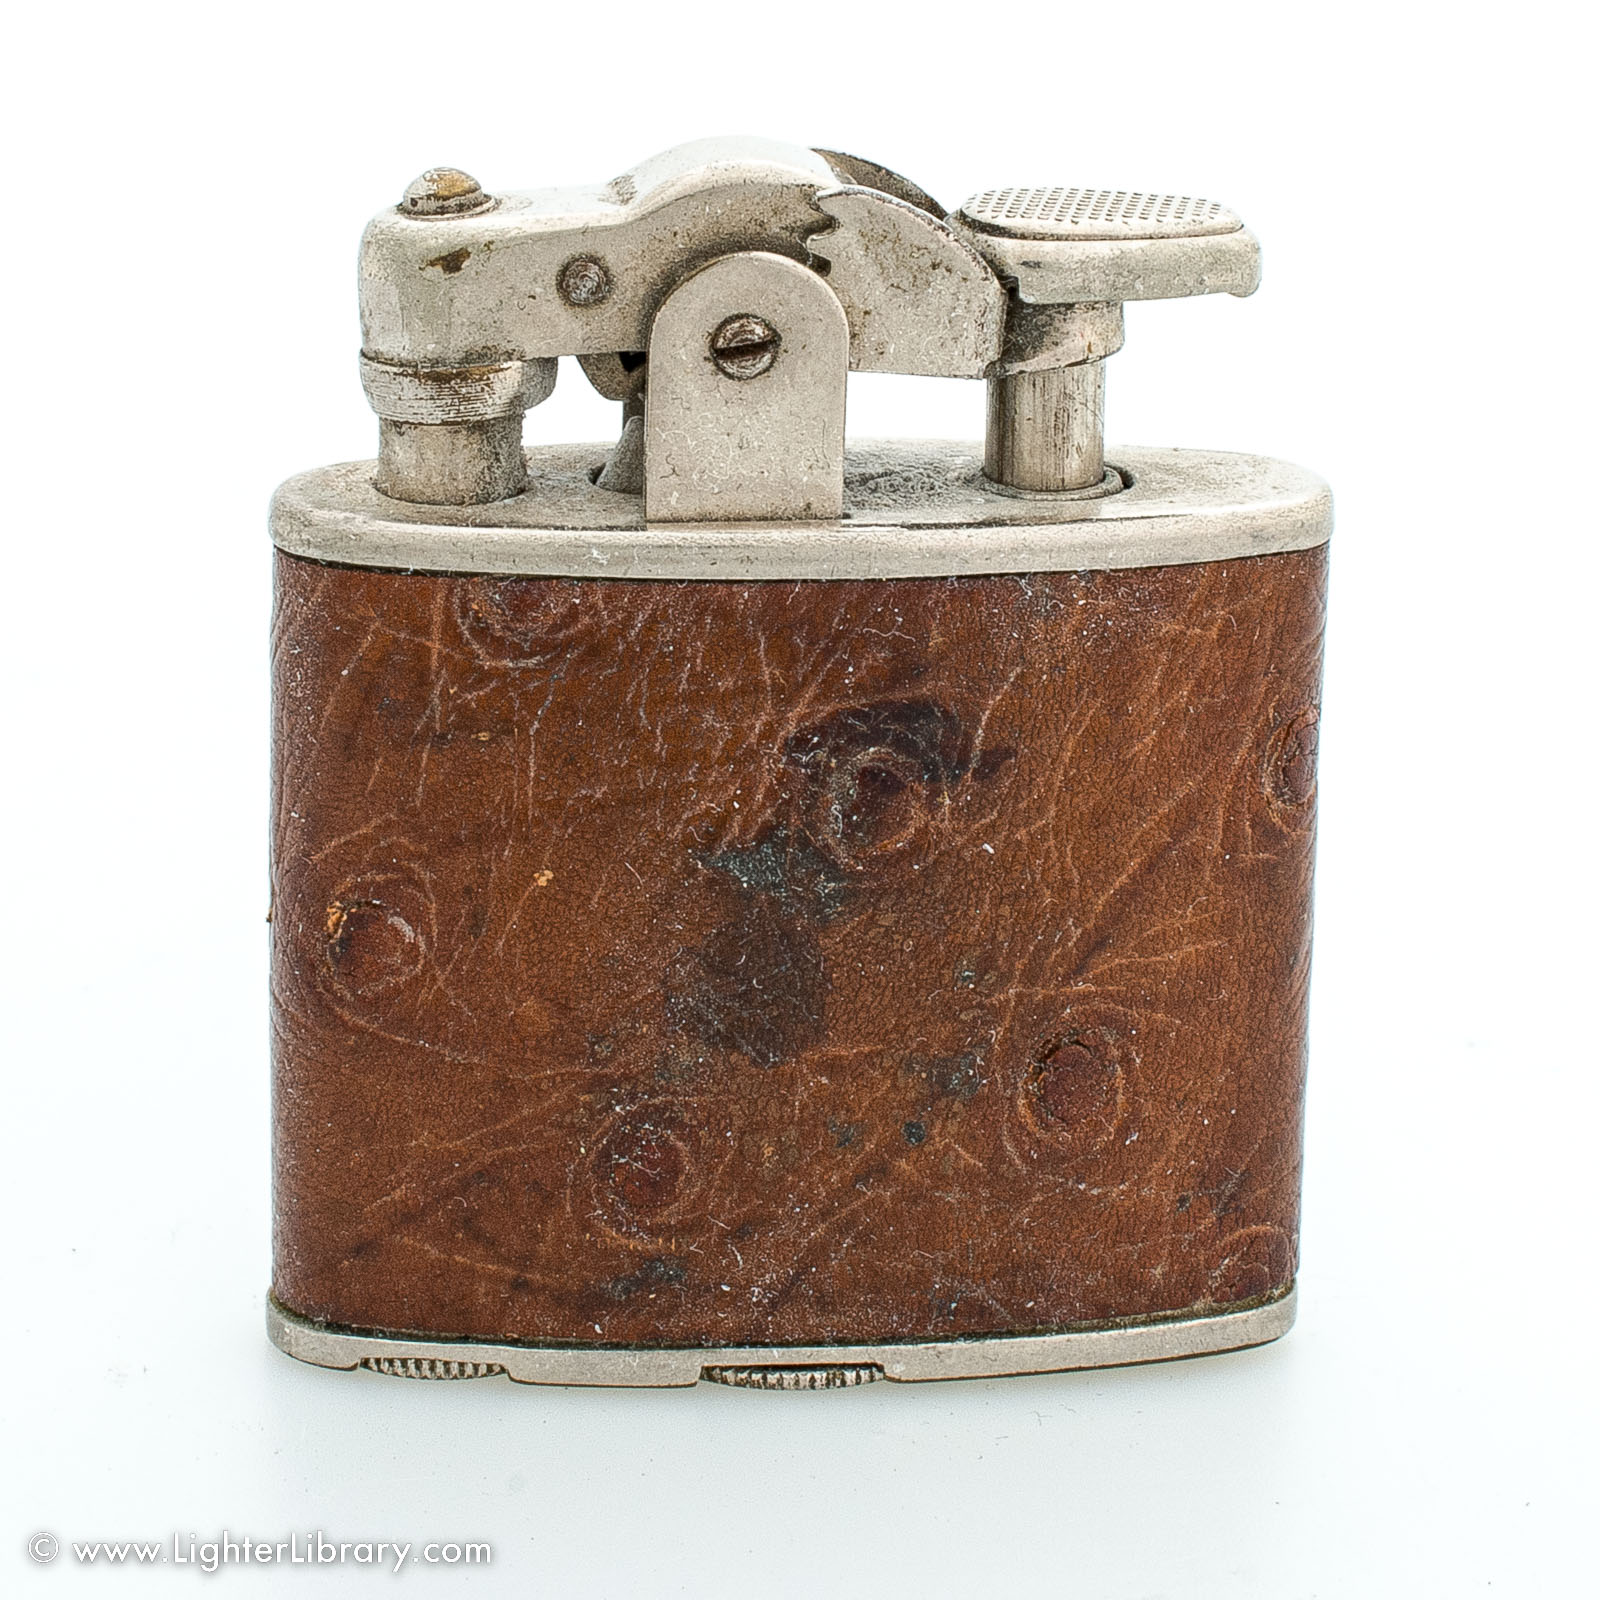 Ronson Art Metal Works - De-Light Standard pocket lighters